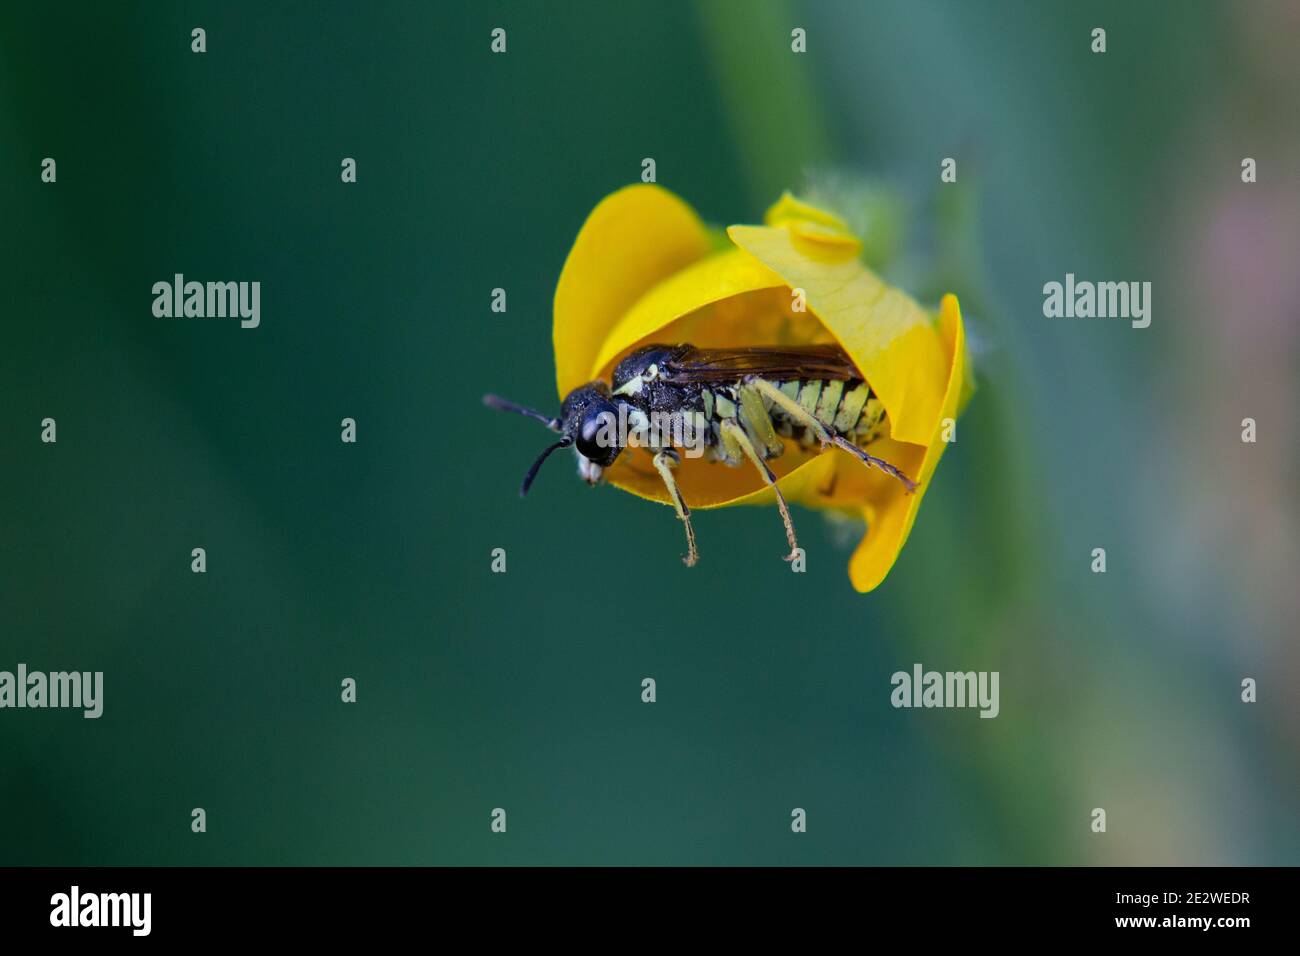 Digger wasp (Argogorytes mystaceus) adulto in un bel fiore giallo (Creeping Buttercup - Ranunculus repens) su sfondo verde Foto Stock